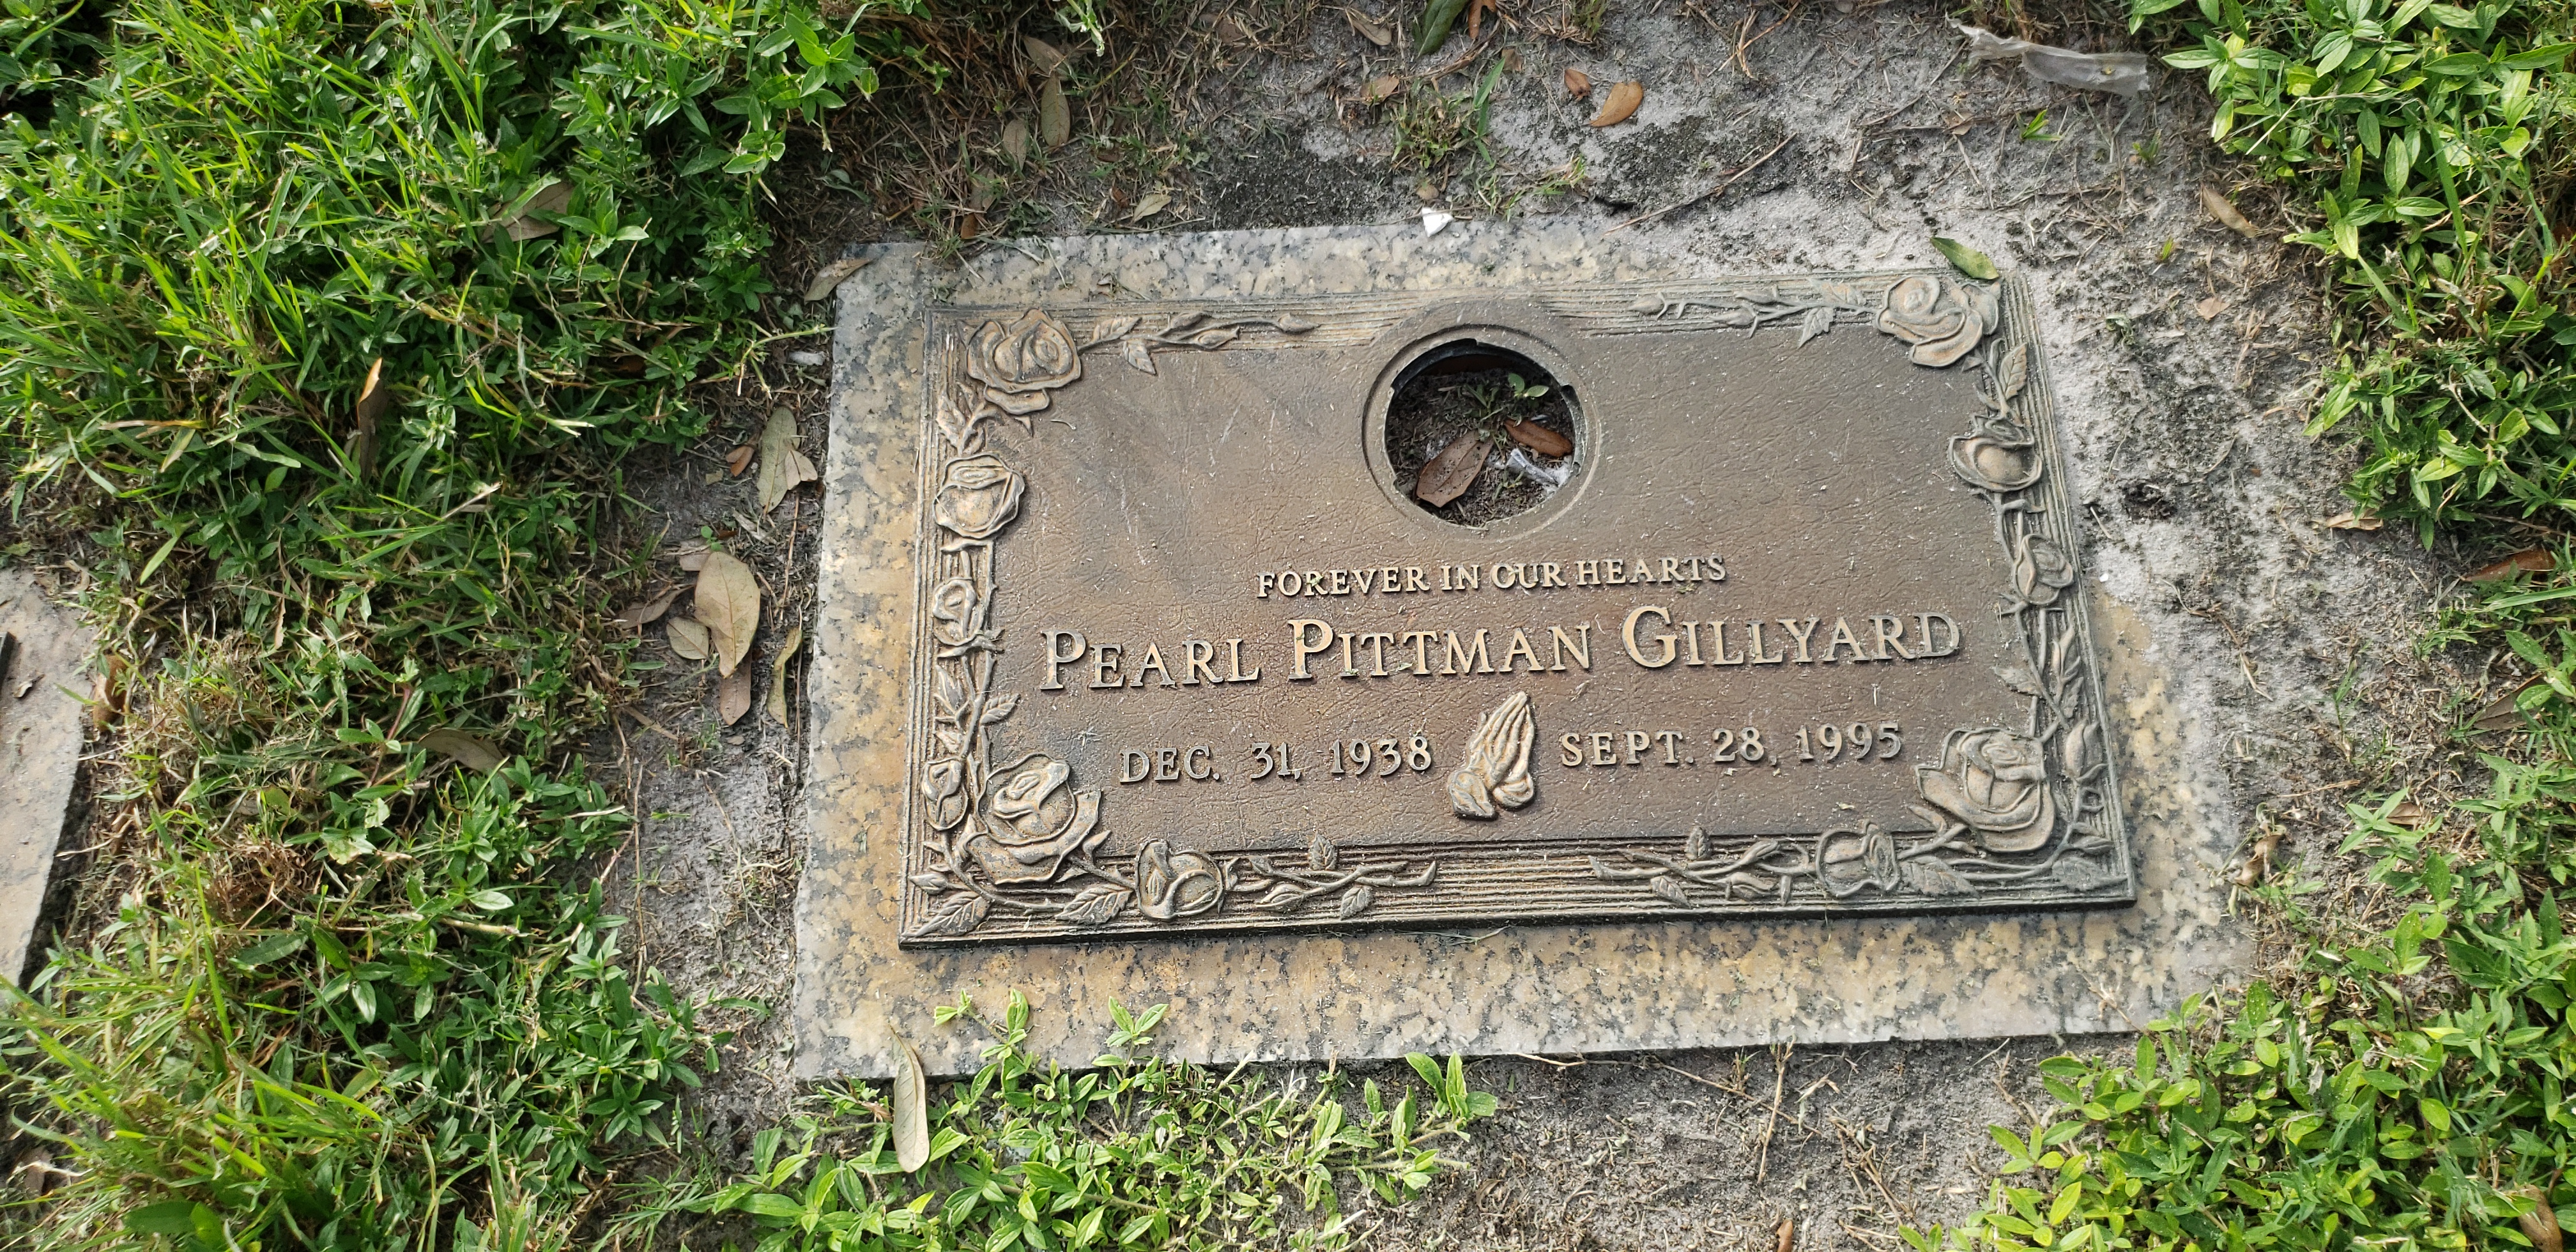 Pearl Pittman Gillyard